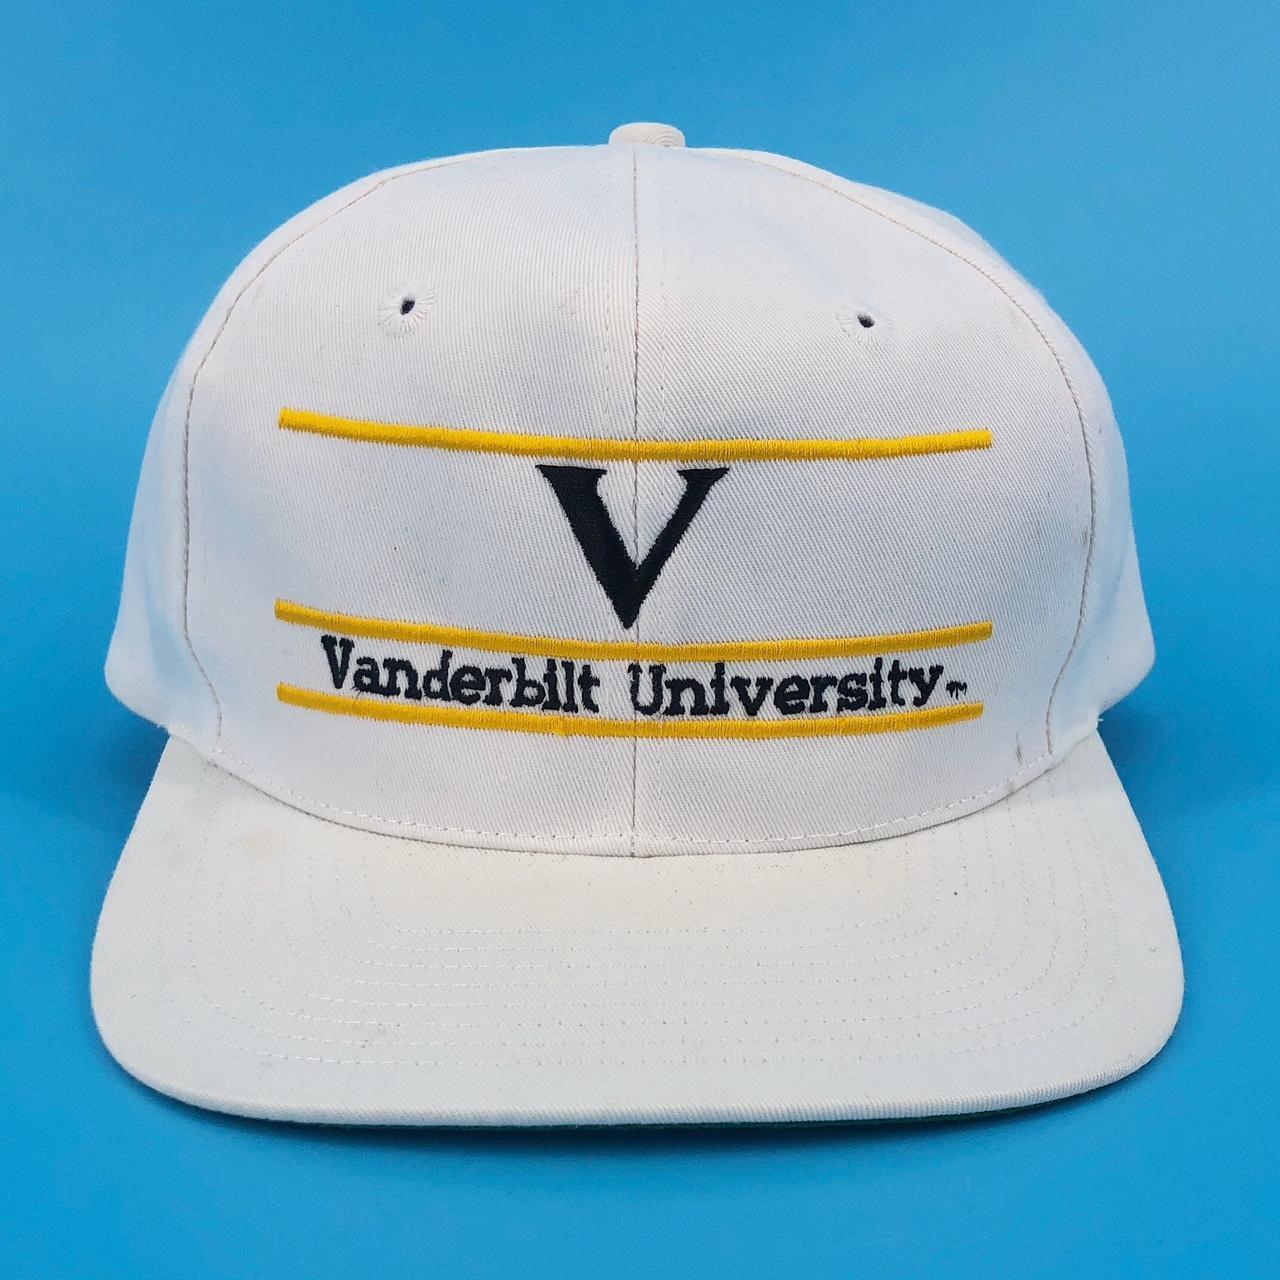 Vanderbilt University Fitted Cap: Vanderbilt University